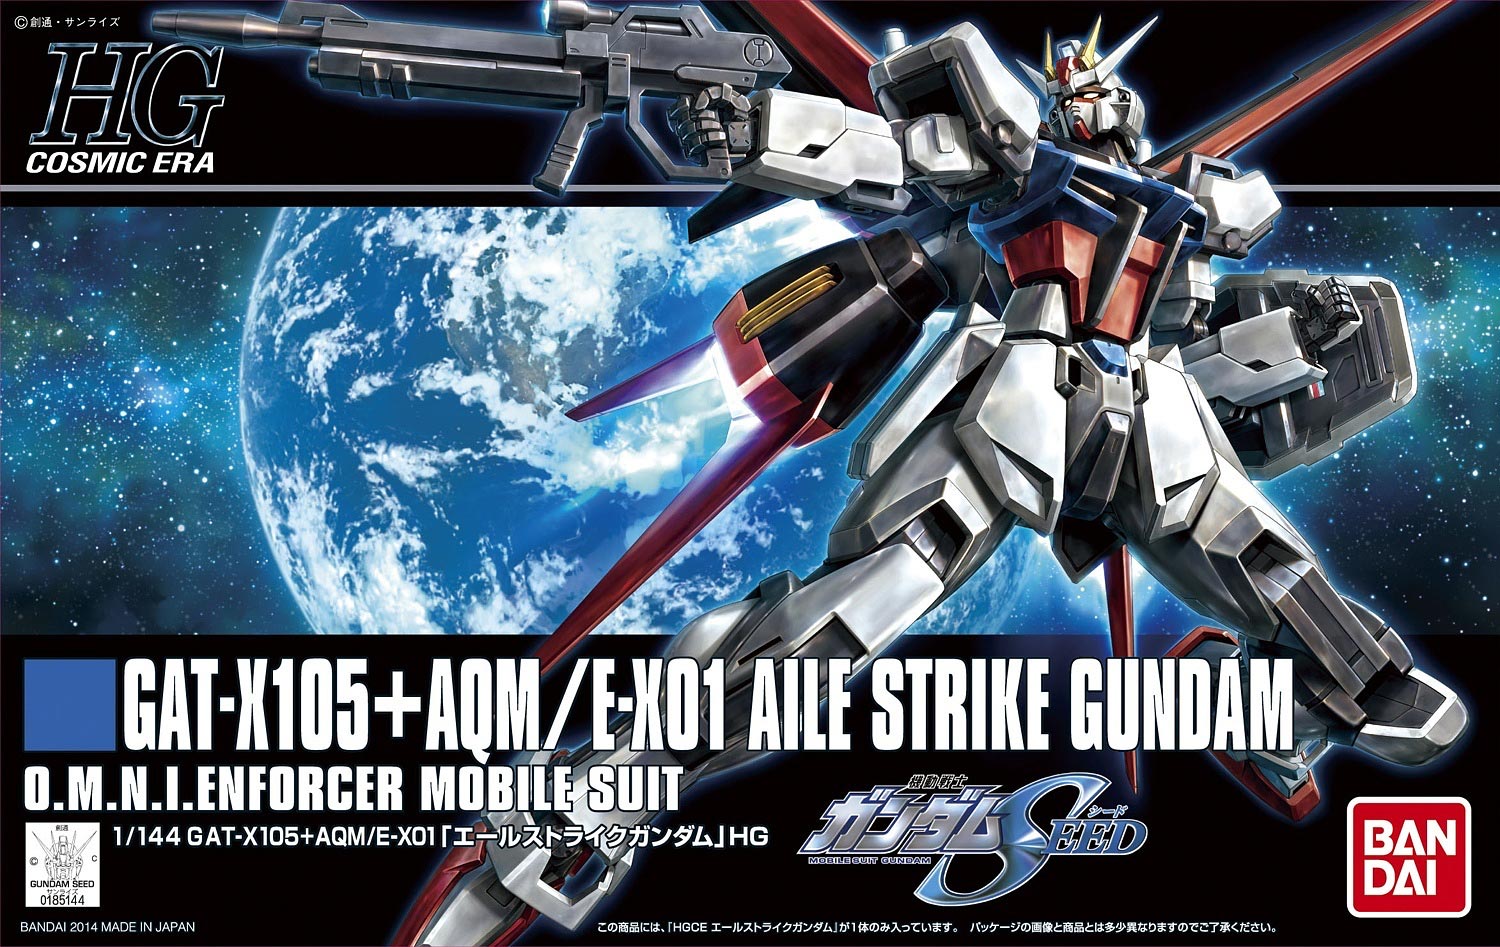 1/144 High Grade Cosmic Era GAT-X105+AQM/E-X01 Aile Strike Gundam from "Gundam SEED" Snap-Together Plastic Model Kit (BAN2219525)